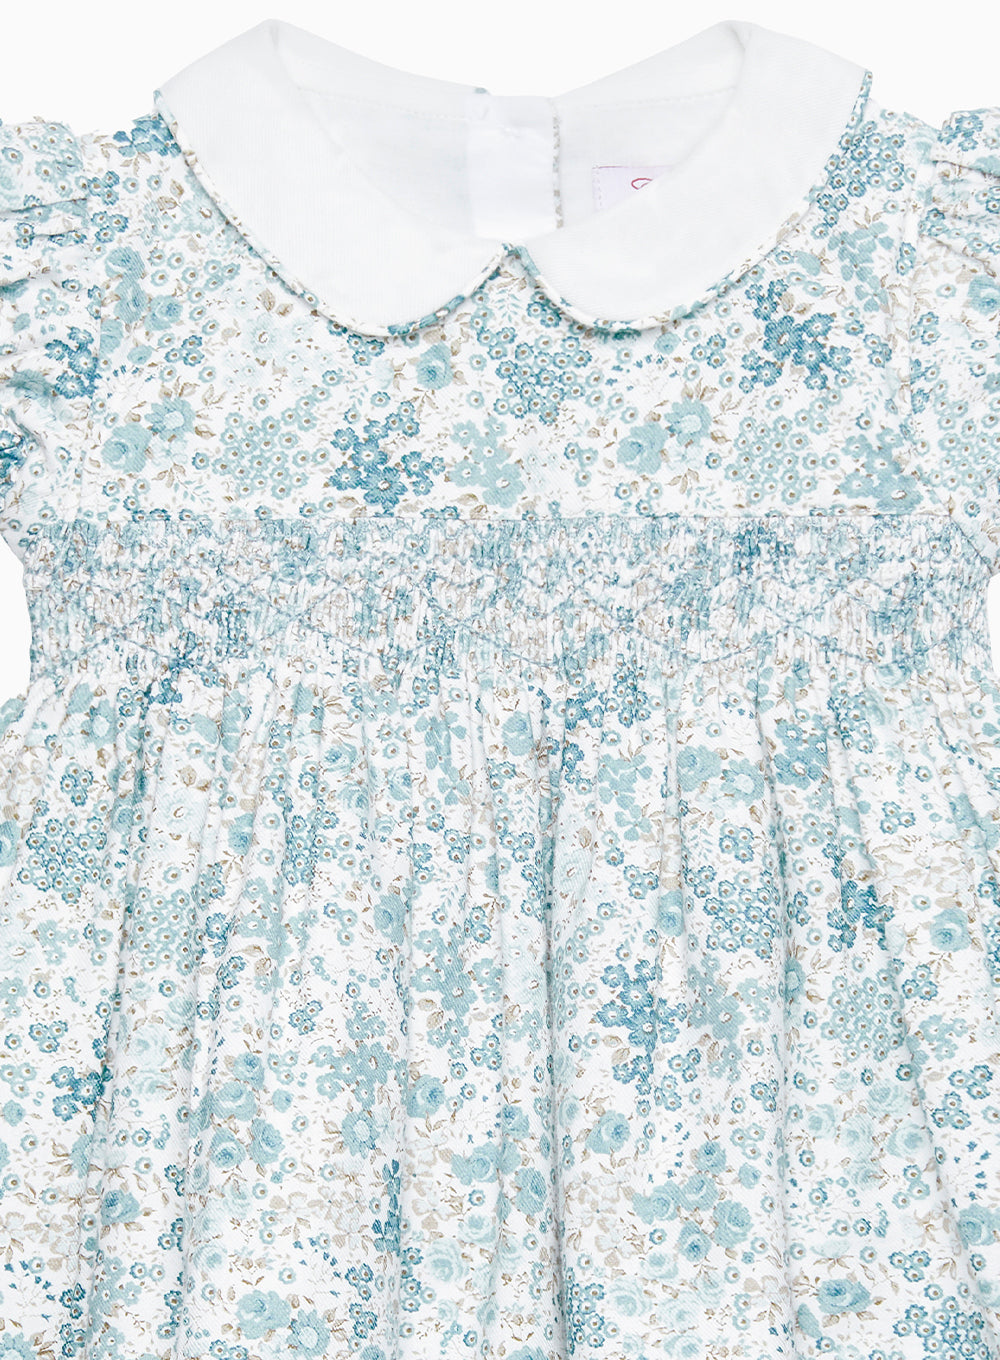 Little Arabella Bloom Smocked Dress in Sea Blue Floral